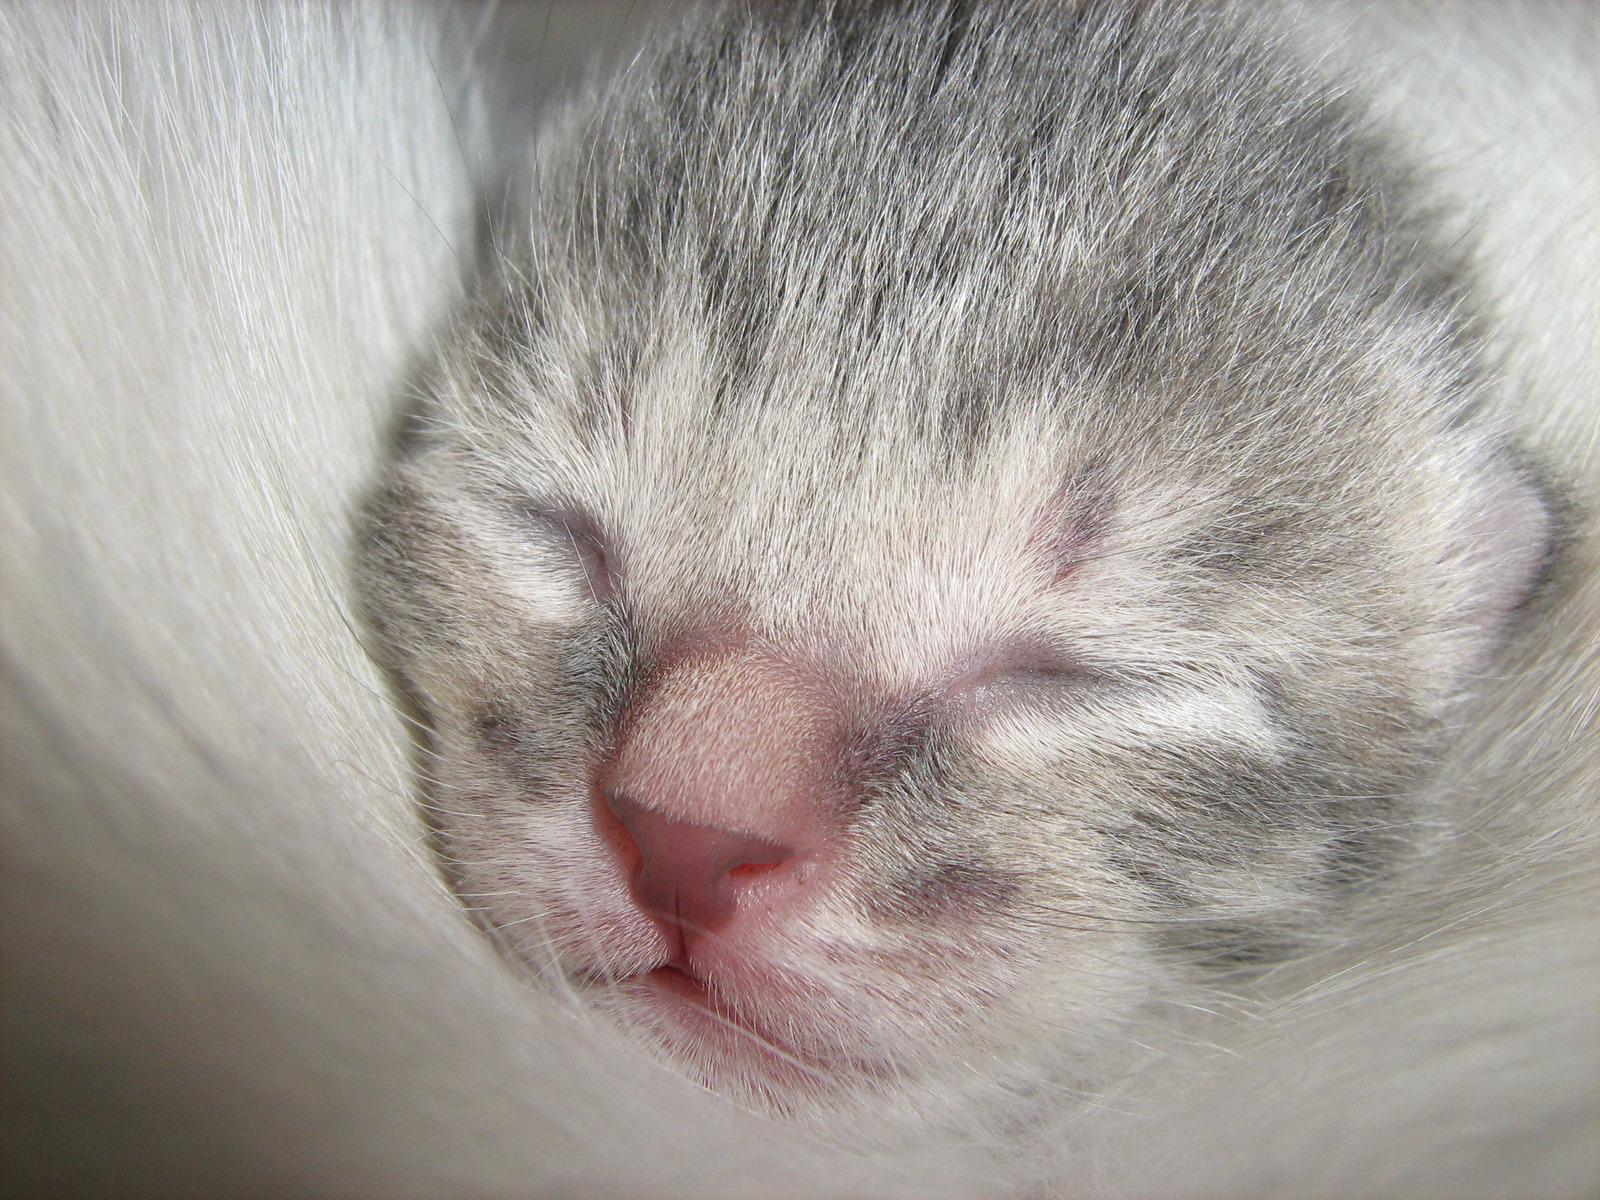 Picture of a newborn smokey Kitten